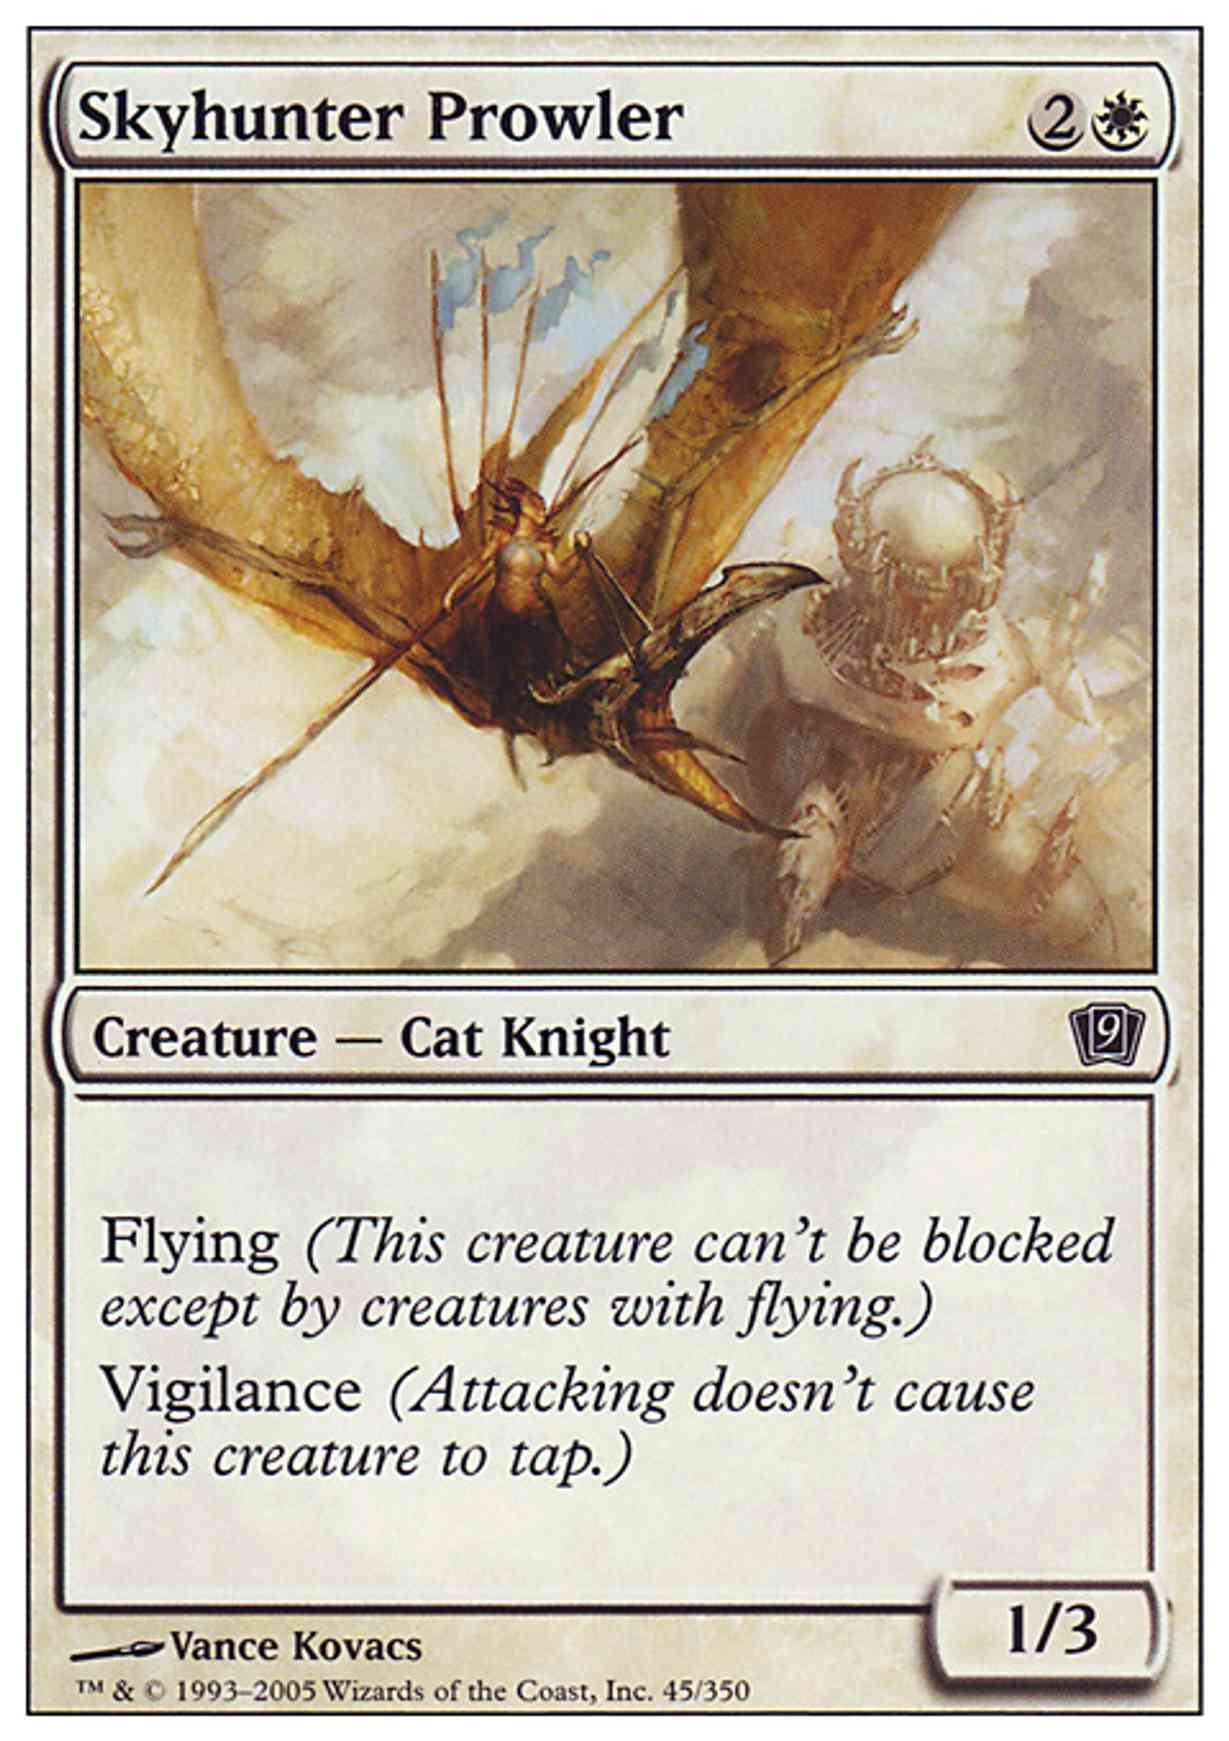 Skyhunter Prowler magic card front